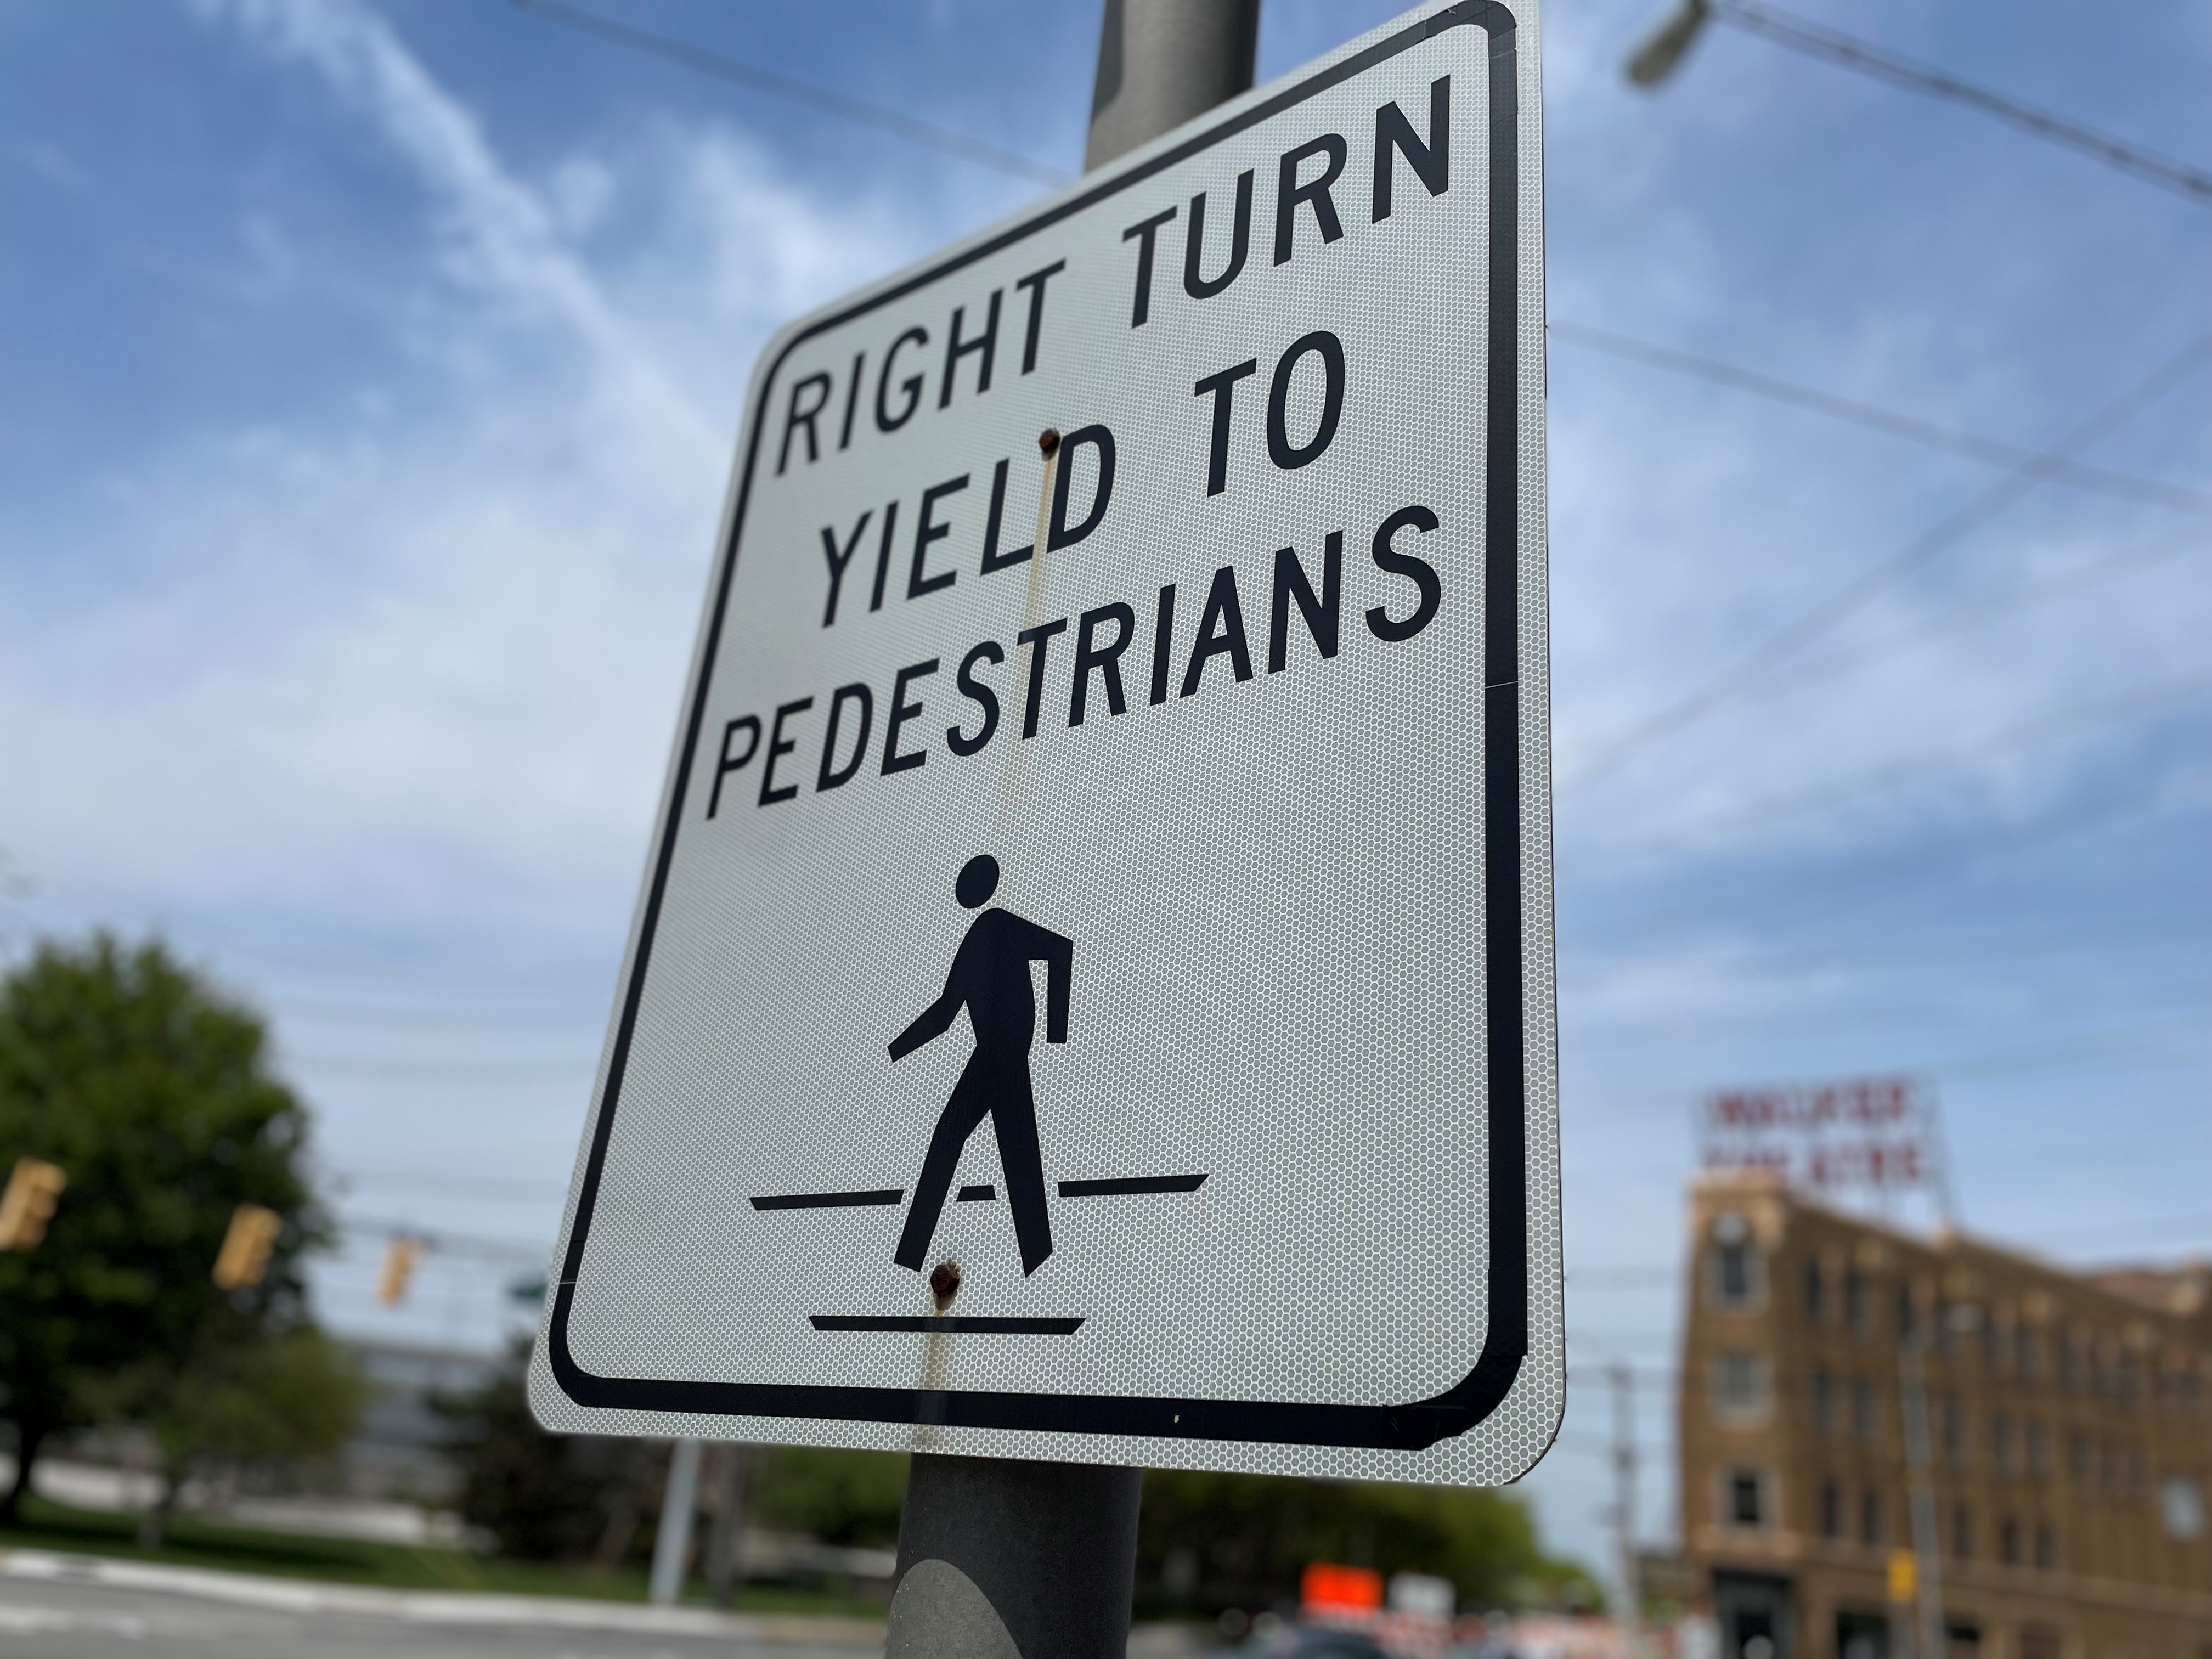 Green light right turn pedestrian deaths road safety (© ITS International | Adam Hill)